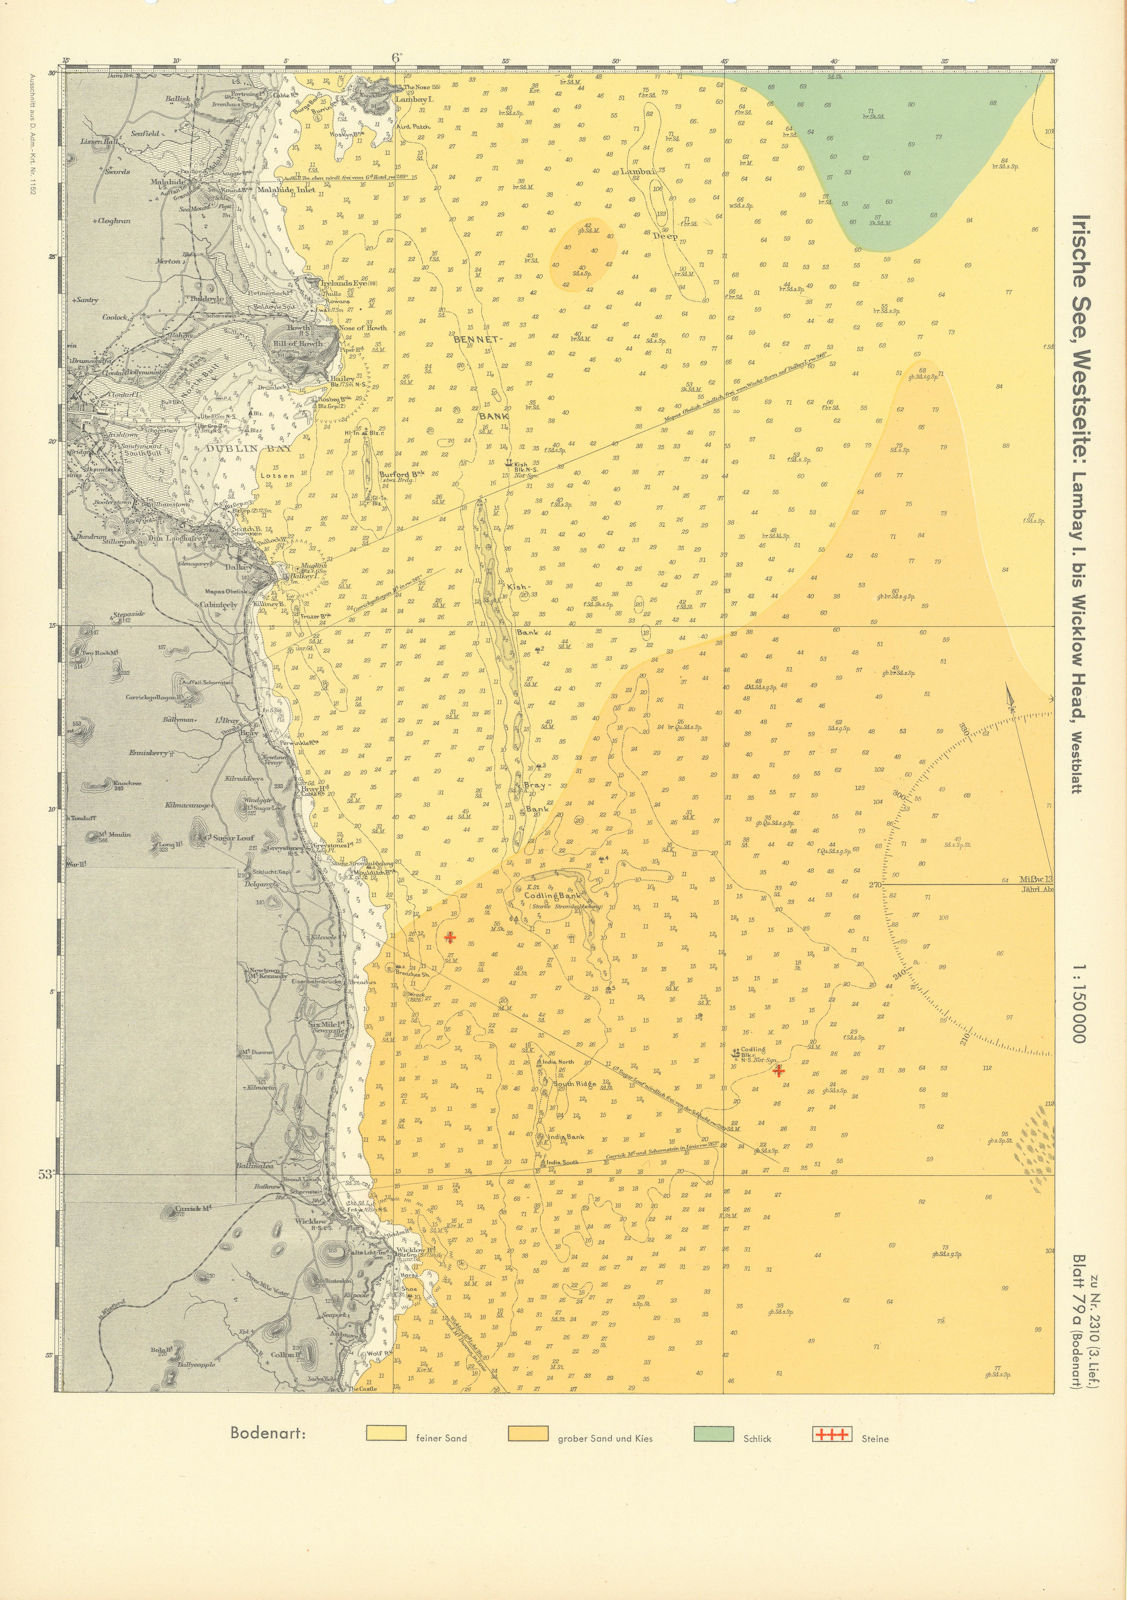 79a. Ireland coast. County Dublin & Wicklow coast. KRIEGSMARINE Nazi map 1940